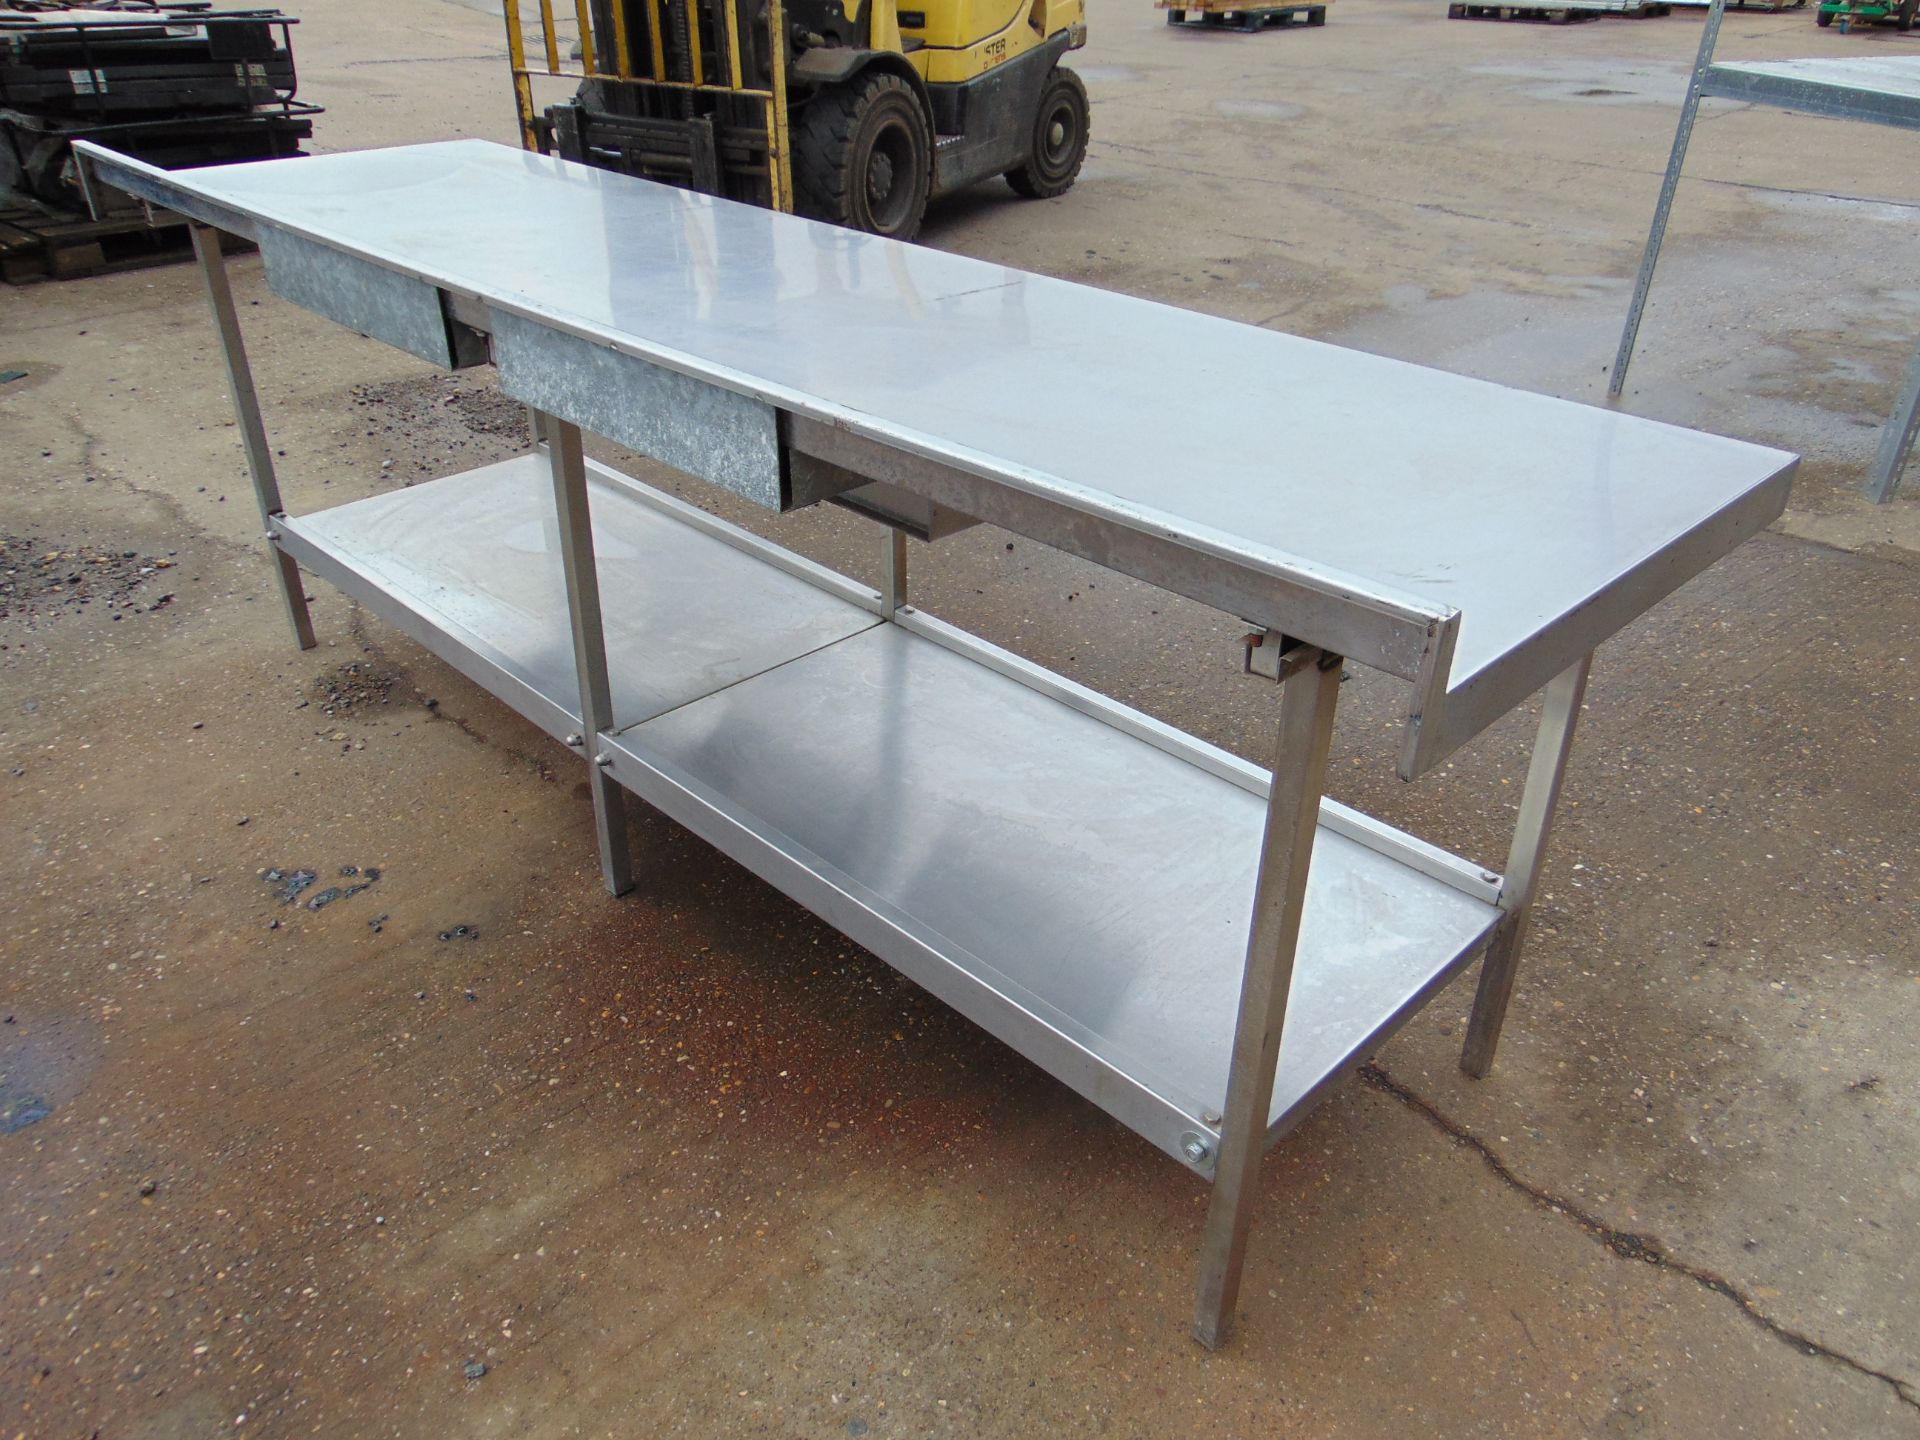 Heavy Duty Stainless Steel Catering Table c/w Splashback, drawers & Undershelf - Image 3 of 6